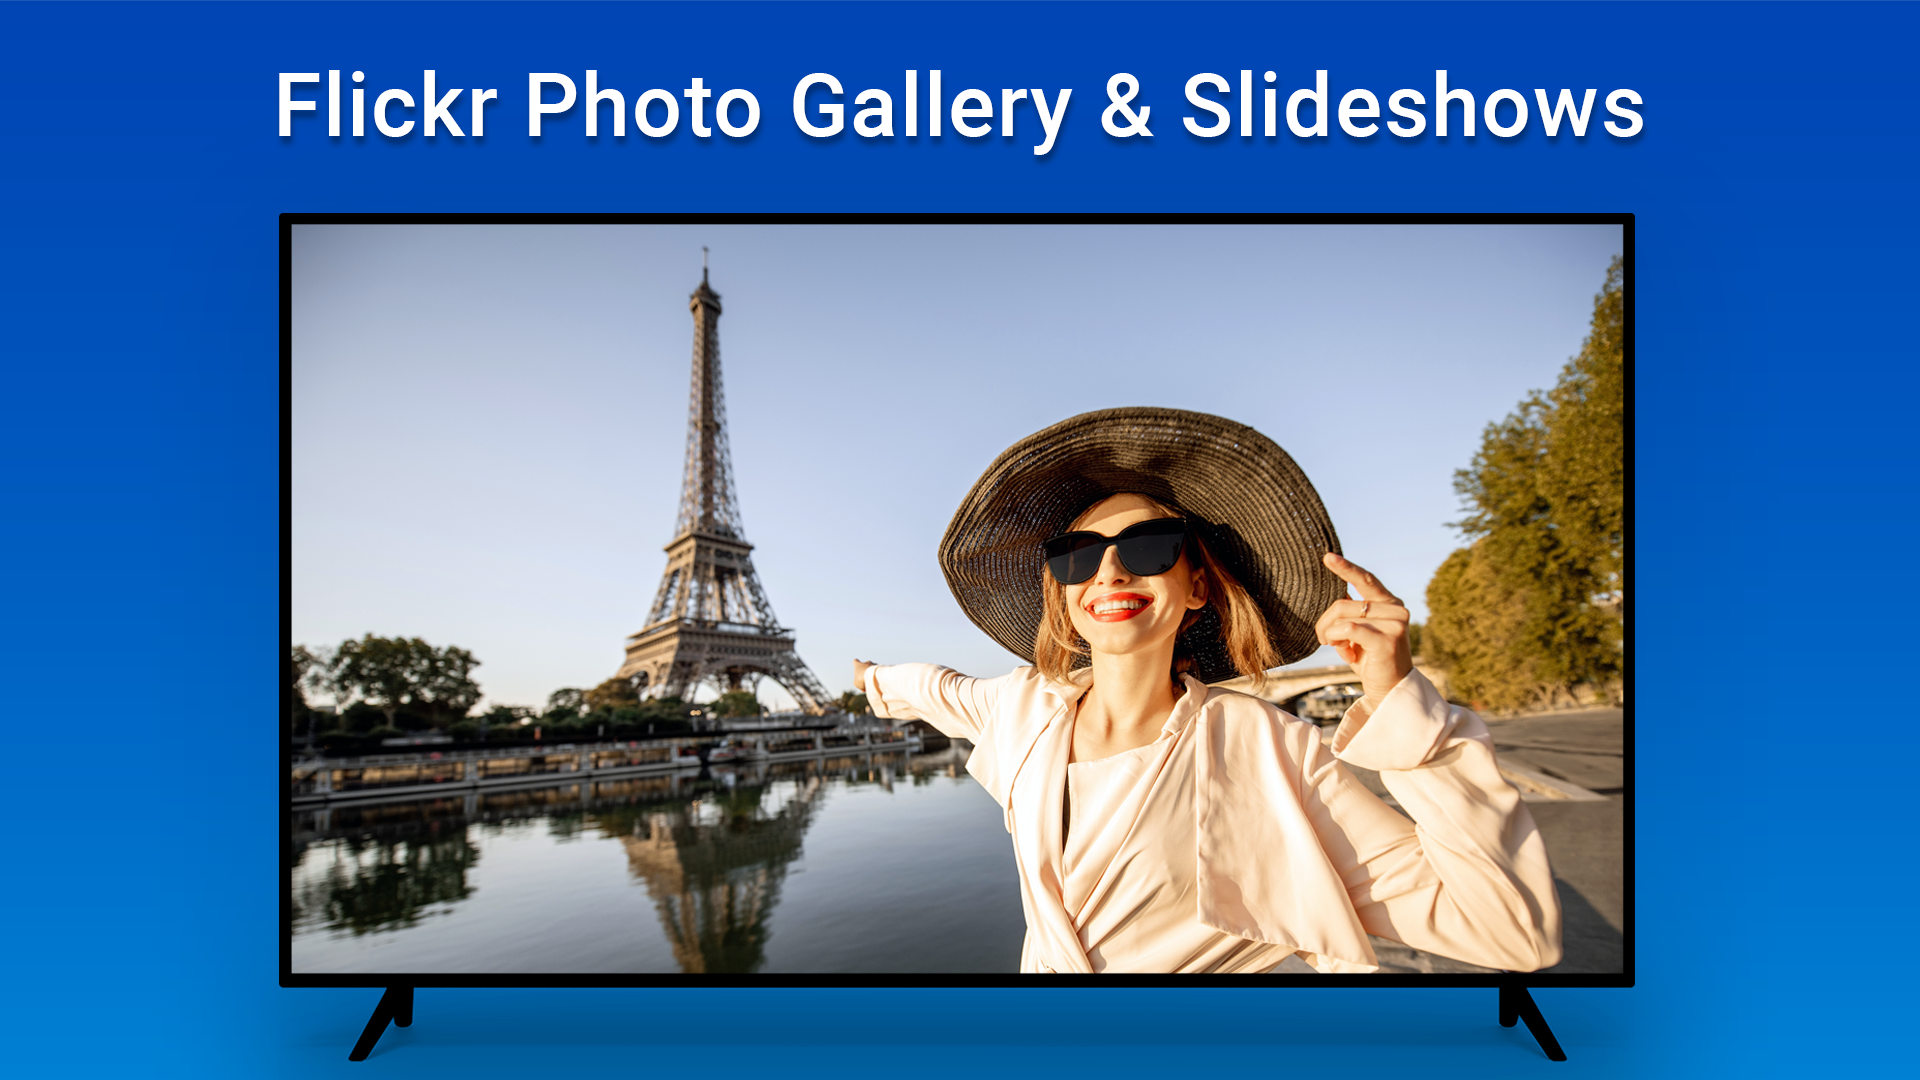 FlickFolio - Flickr Photos & Slideshows